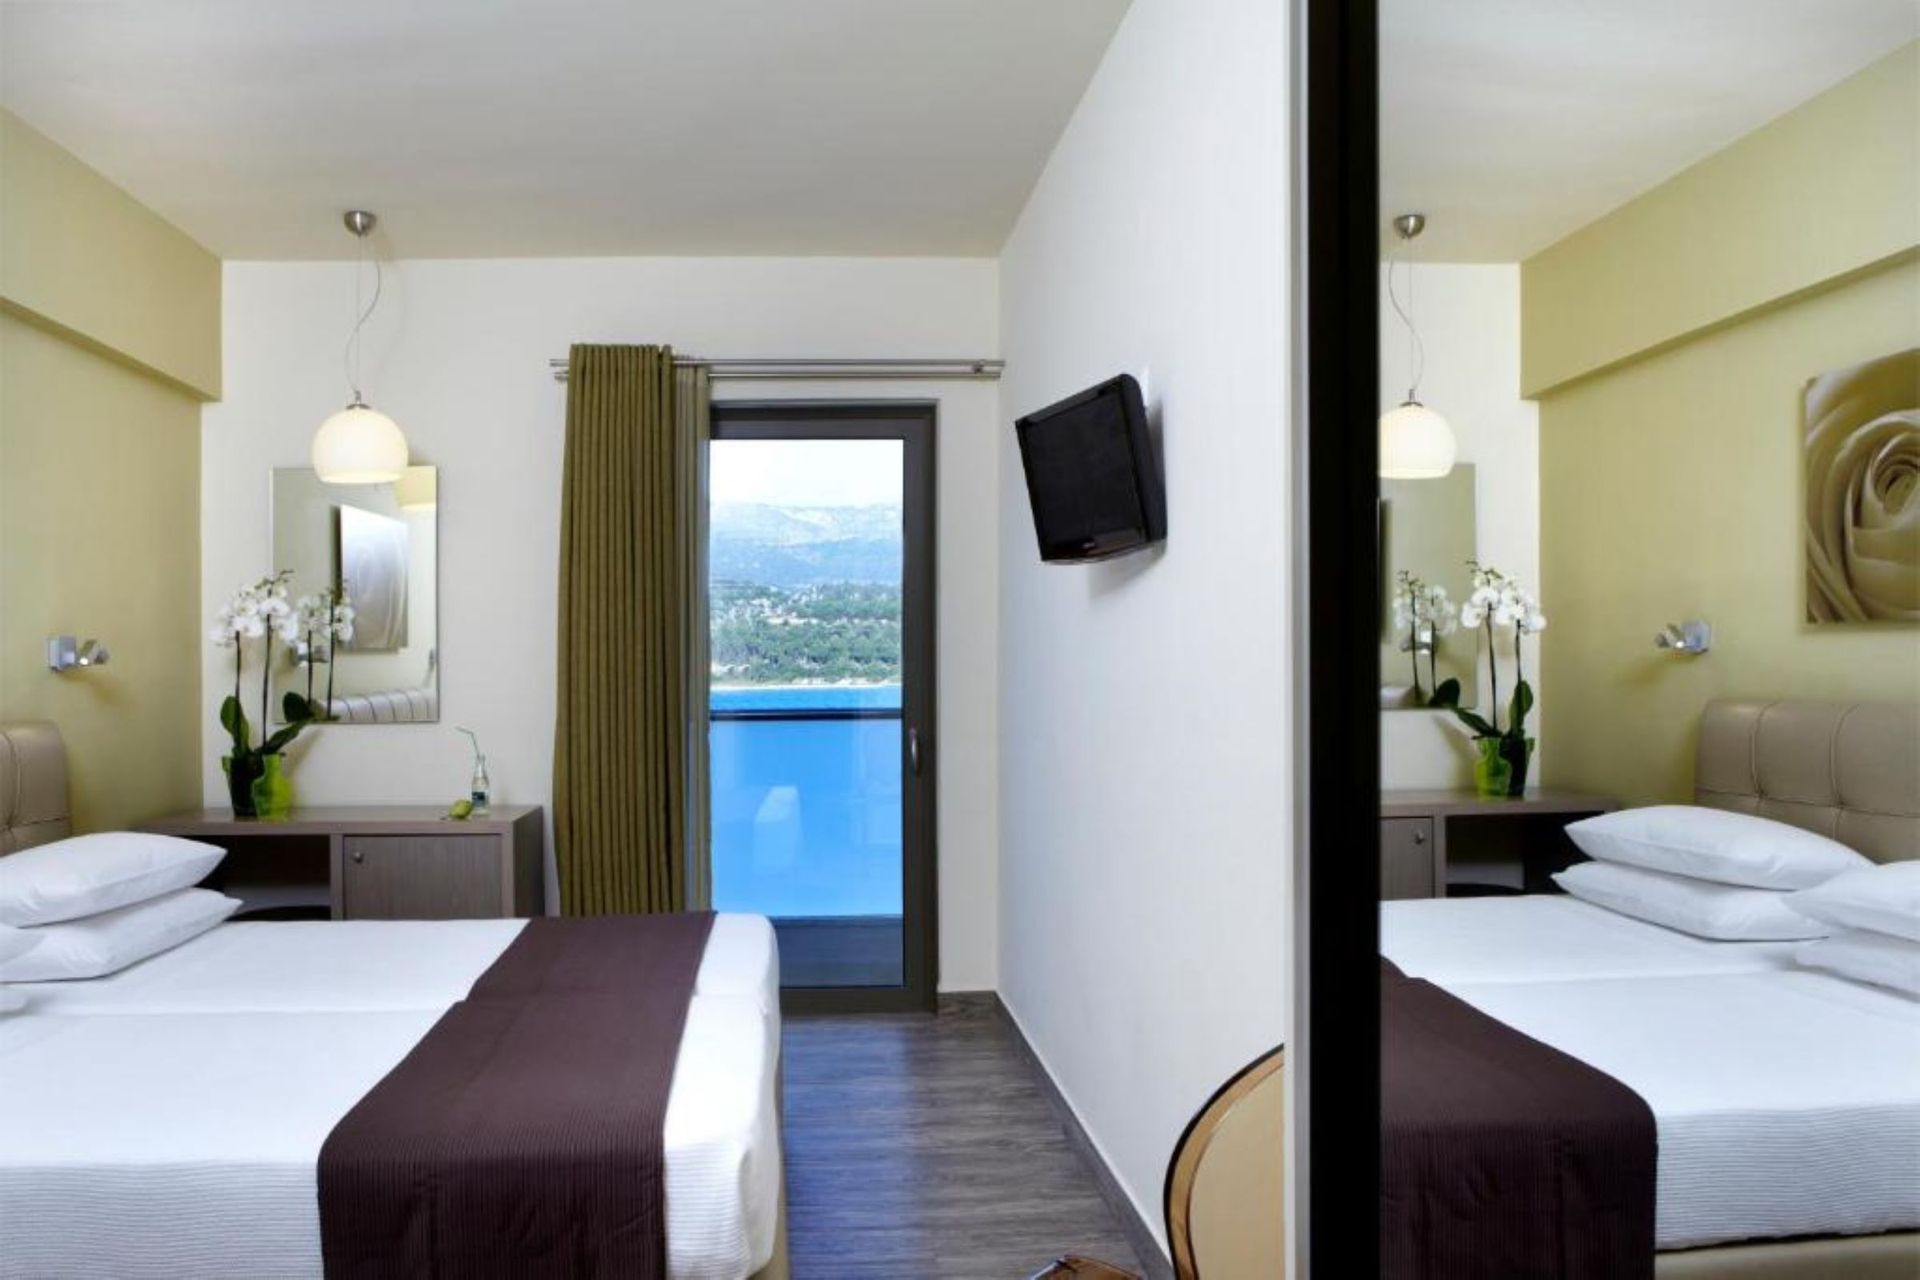 Mouikis Hotel - Κεφαλονιά ✦ 2 Ημέρες (1 Διανυκτέρευση) ✦ 2 άτομα ✦ 2 ✦ έως 30/09/2022 ✦ Υπέροχη Τοποθεσία!